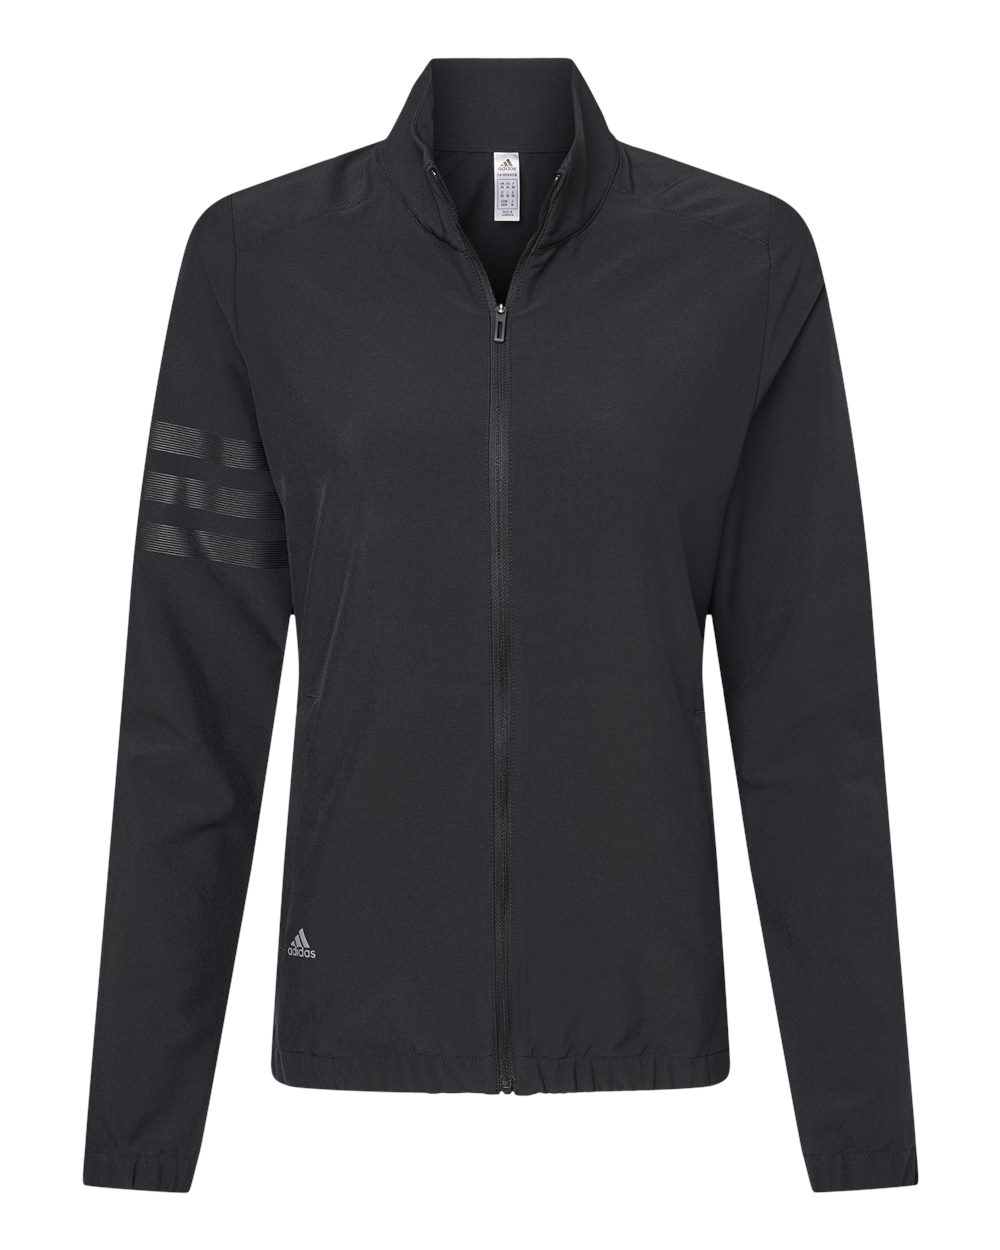 Adidas Women's 3-Stripes Full-Zip Jacket | Entripy